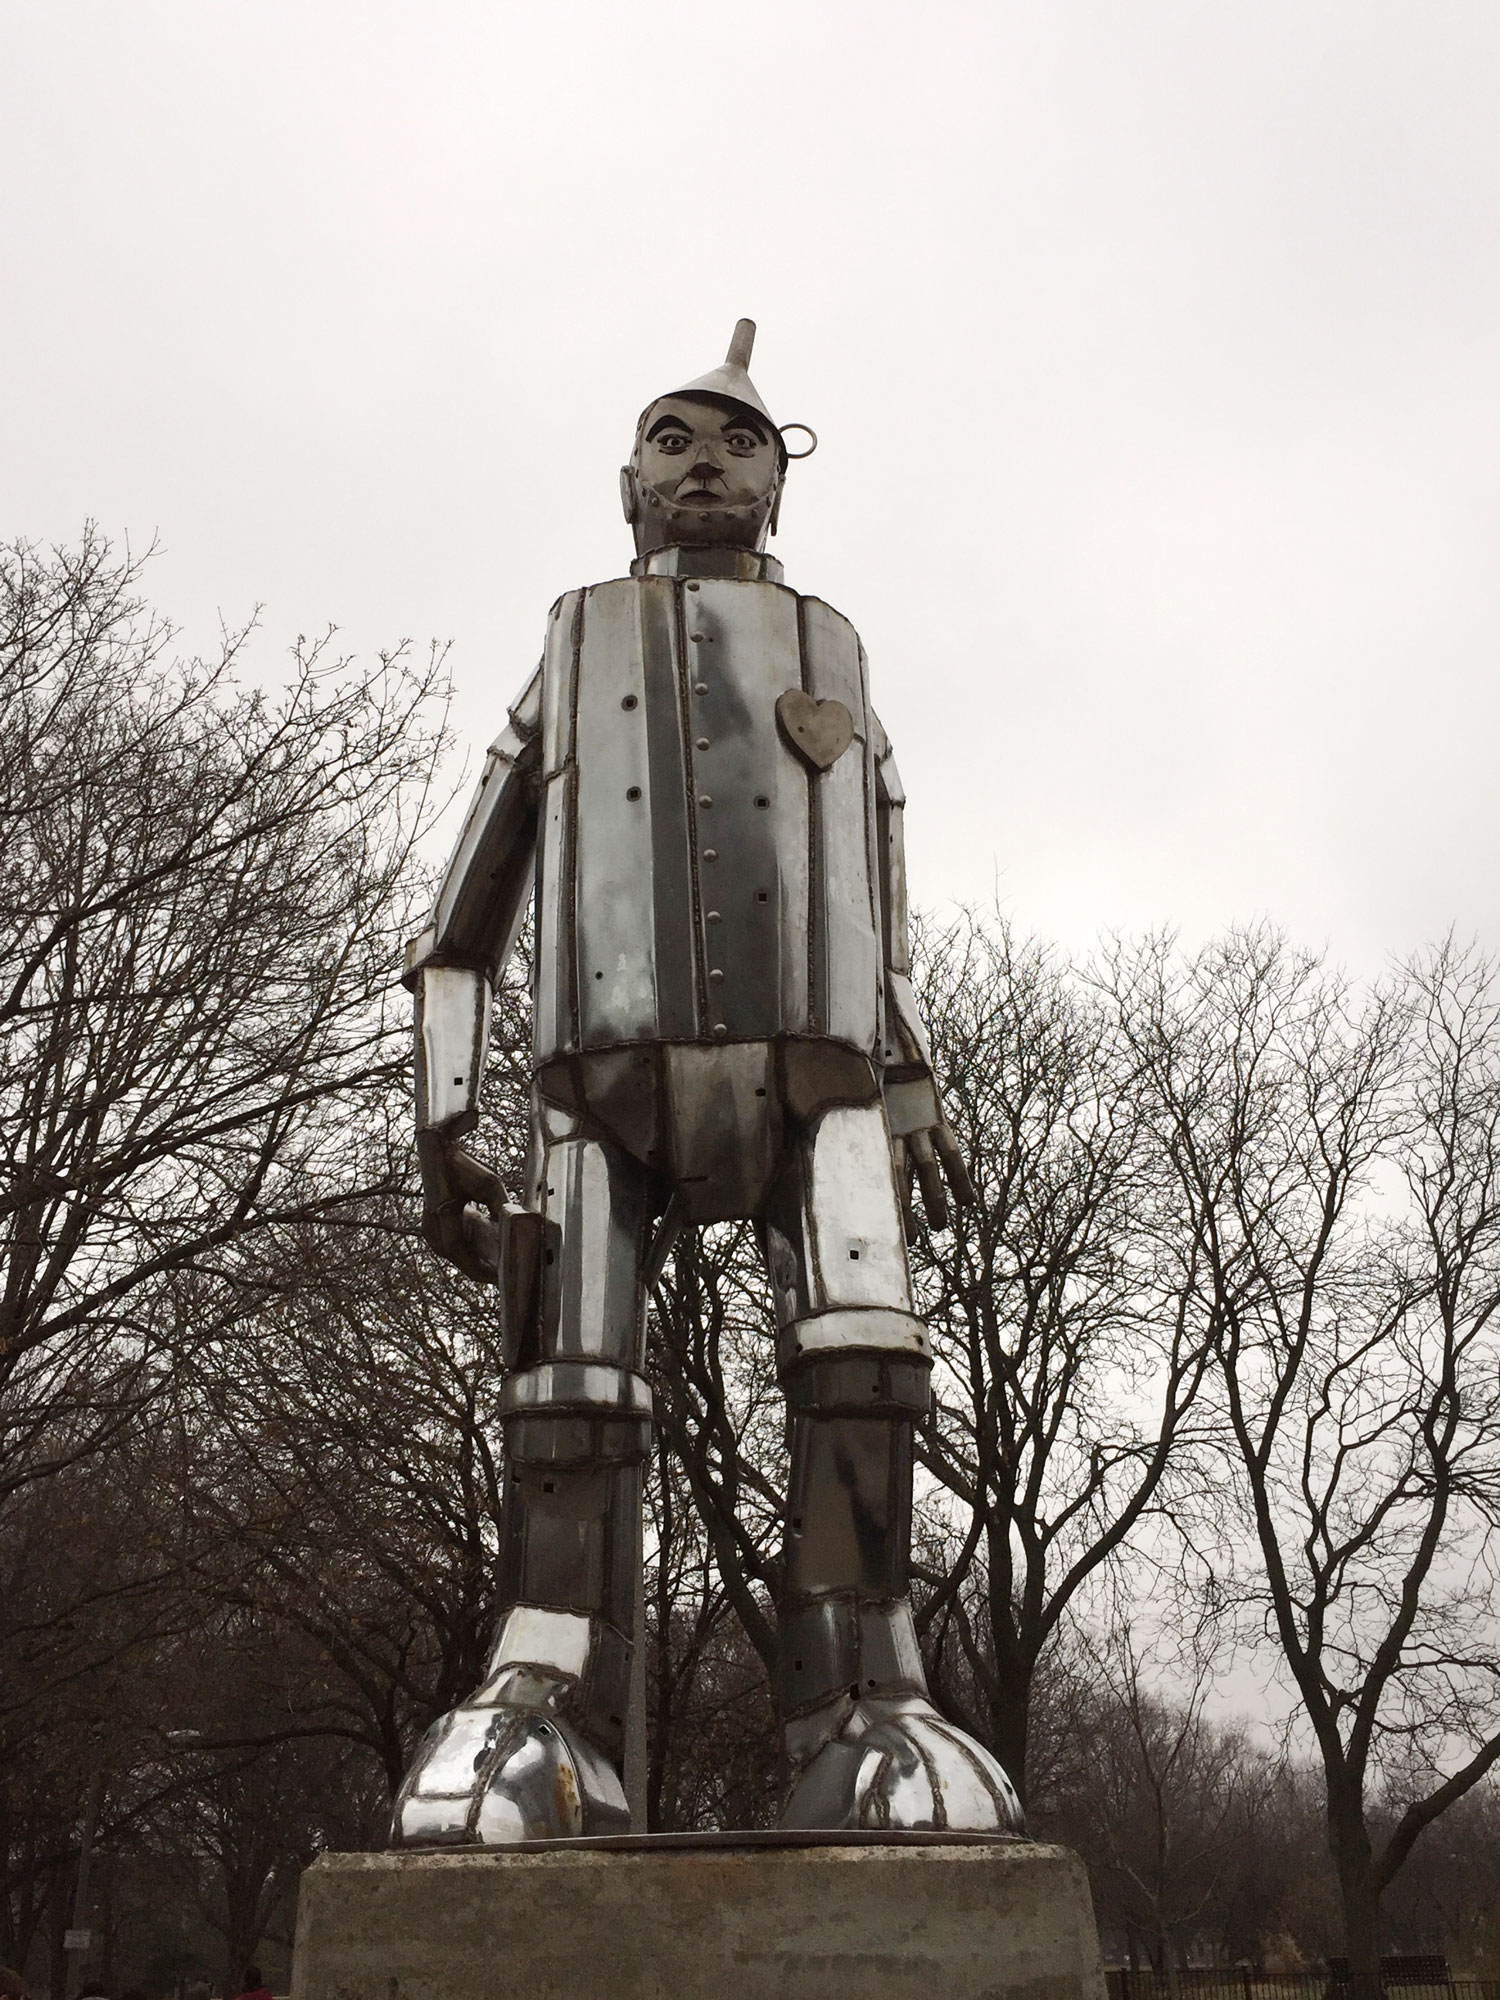 Tin man in Oz Park in Chicago